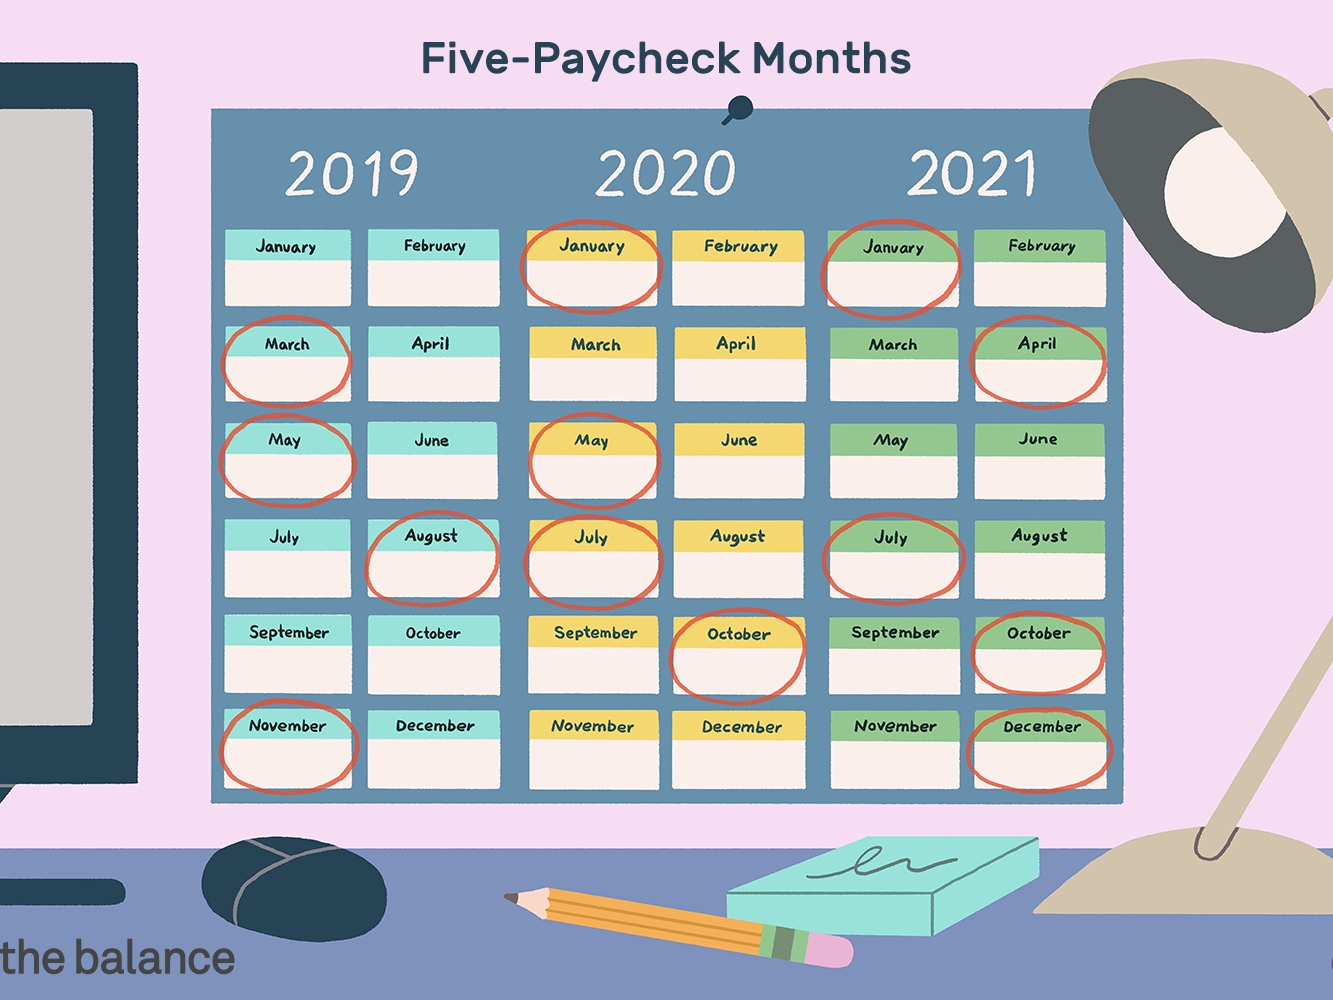 Catch Calendar Month Payments